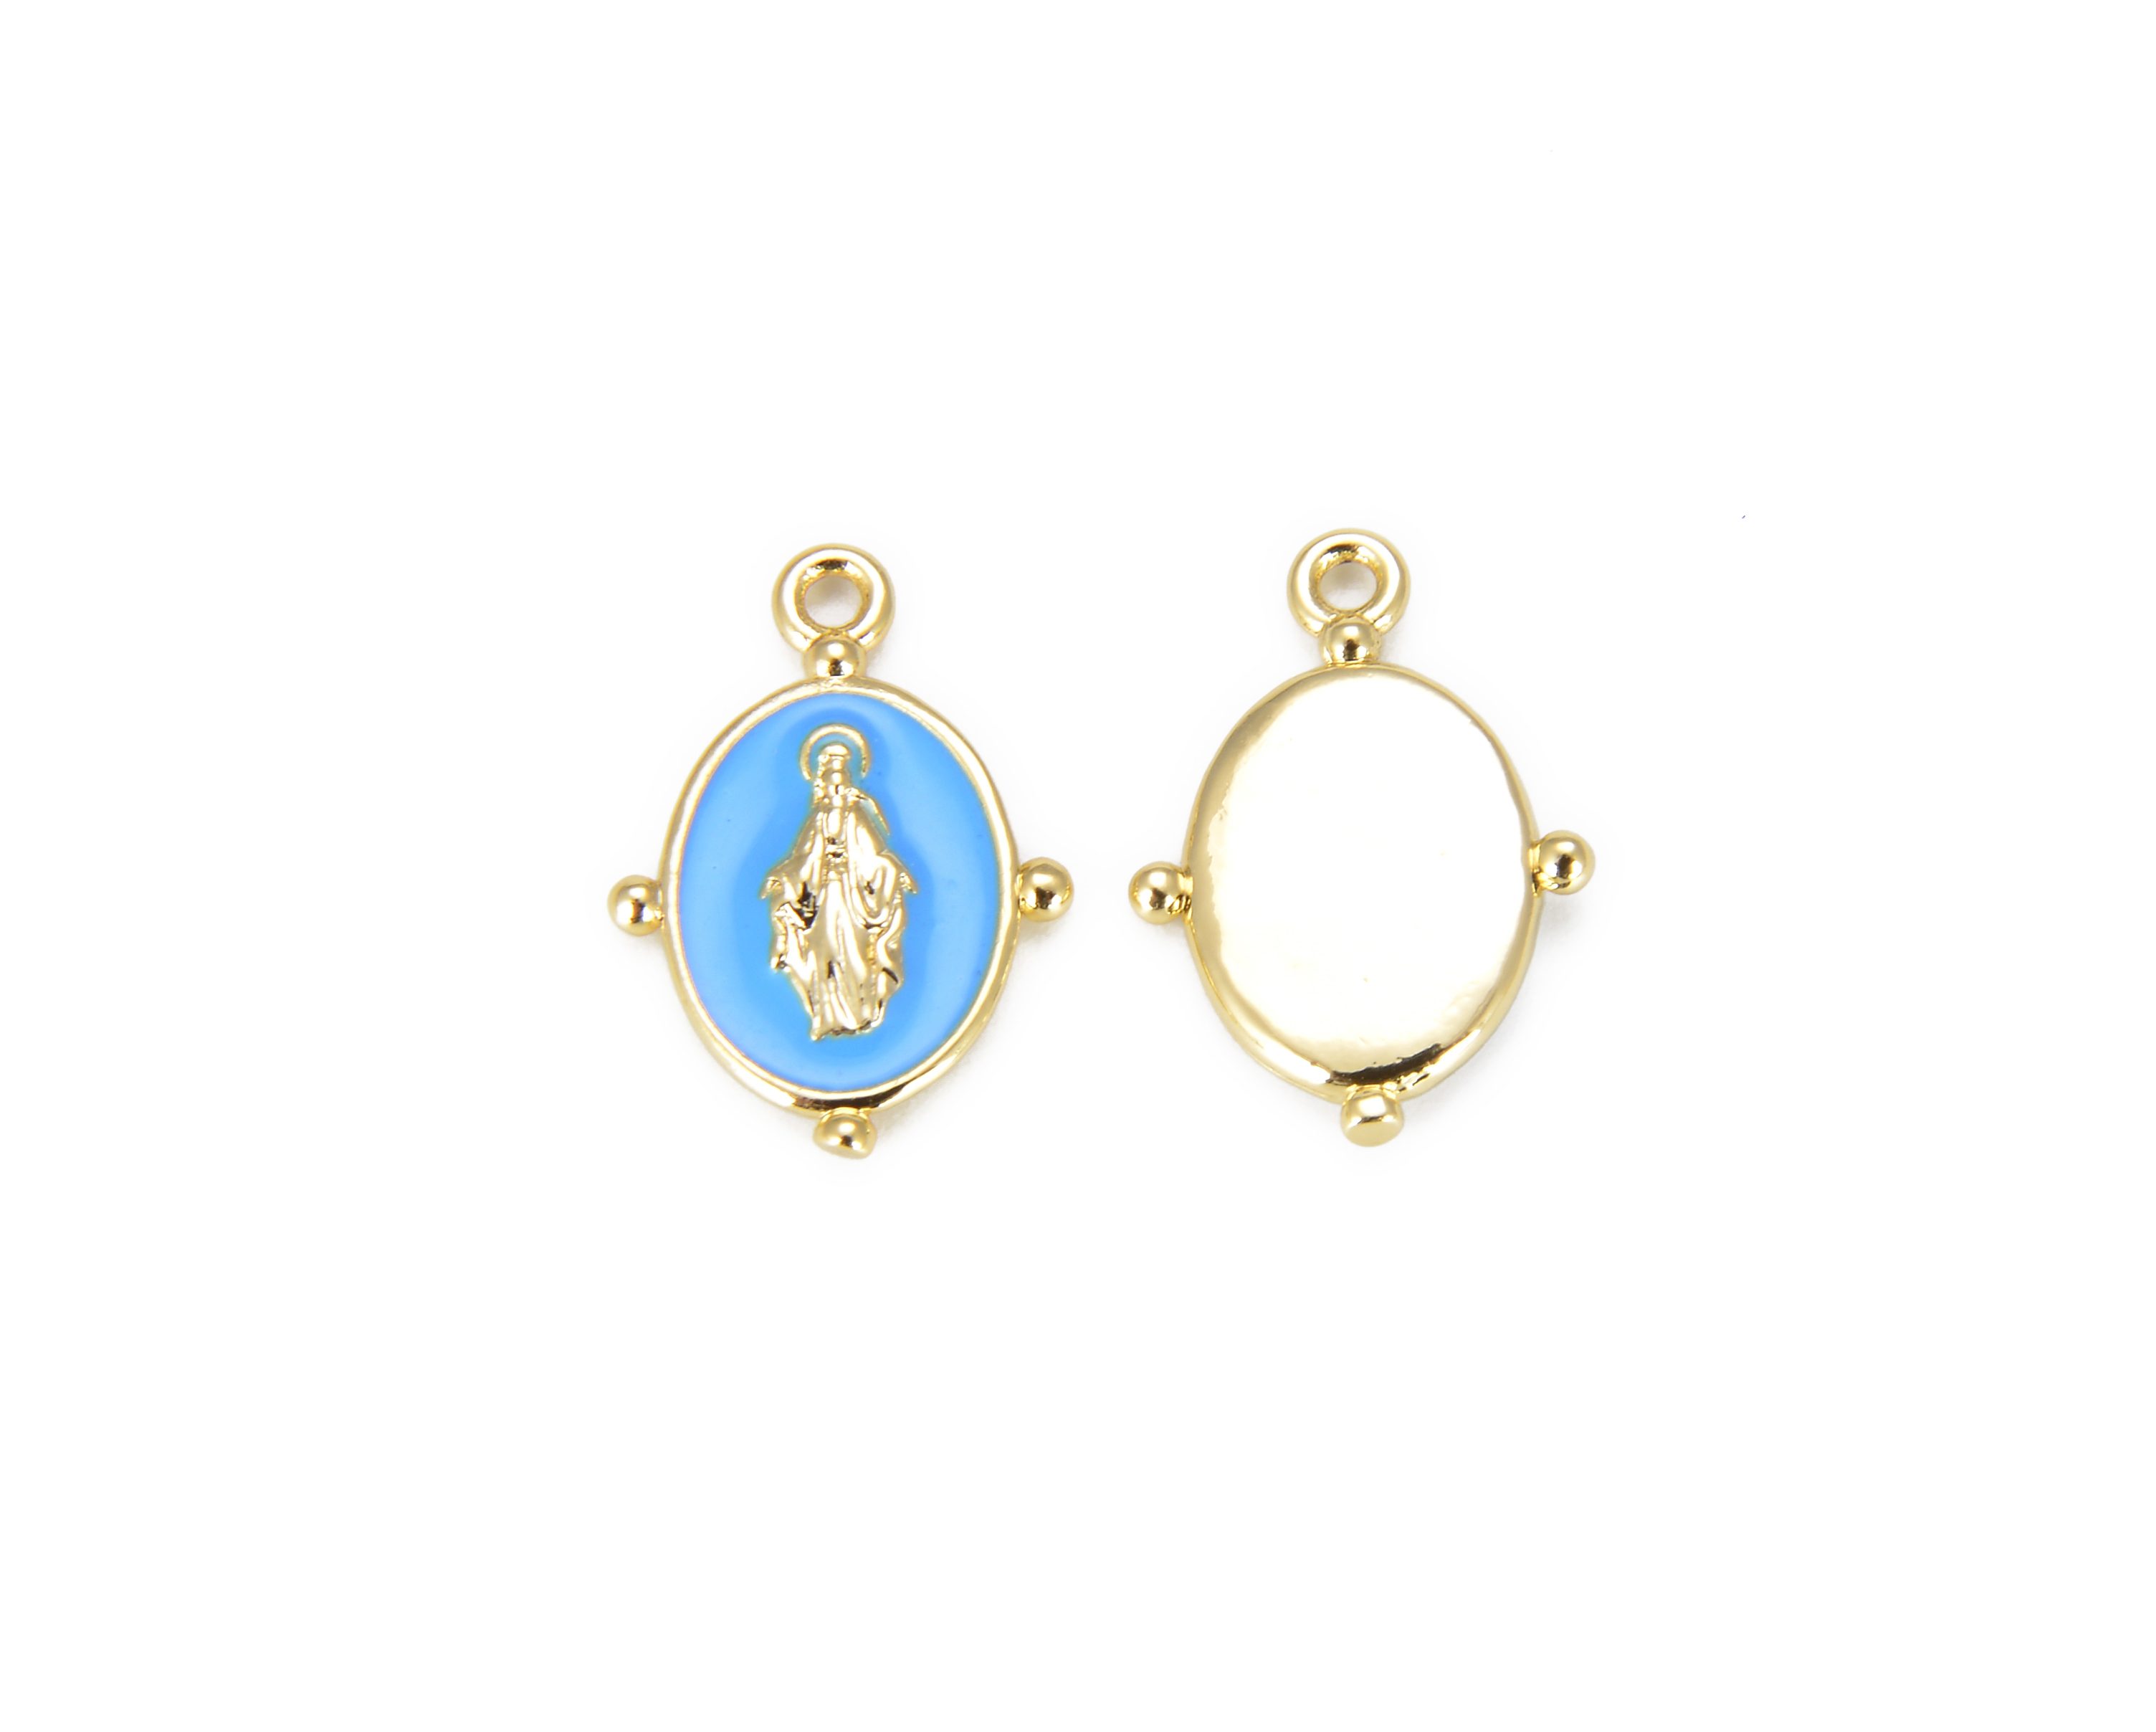 10PCS,18K Gold Filled Enamel Rectangle Virgin Mary Charm Pendant,Enamel Religious Cross Necklace Bracelet,DIY Jewelry Making Supply